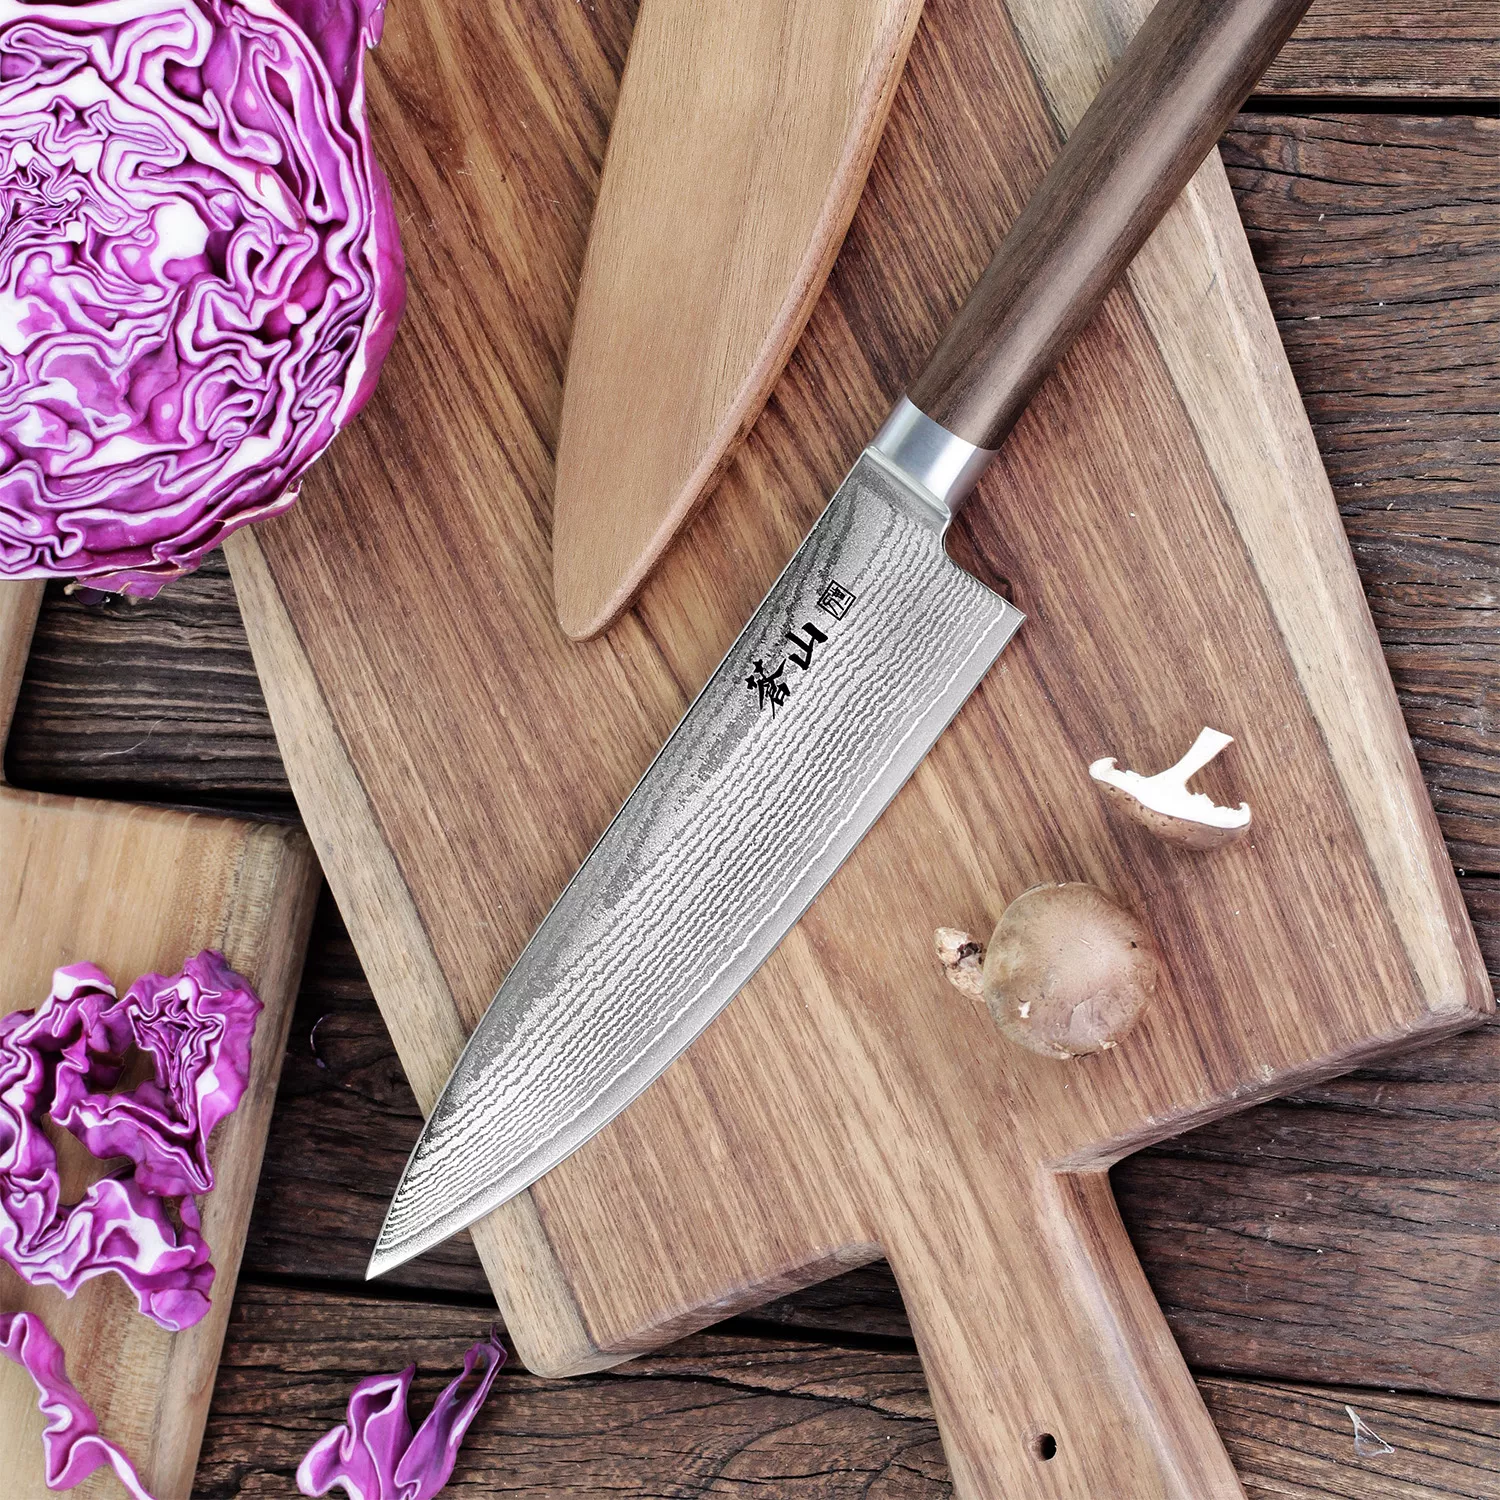 HAKU Series 8-Inch Chef's Knife with Sheath, Forged X-7 Damascus